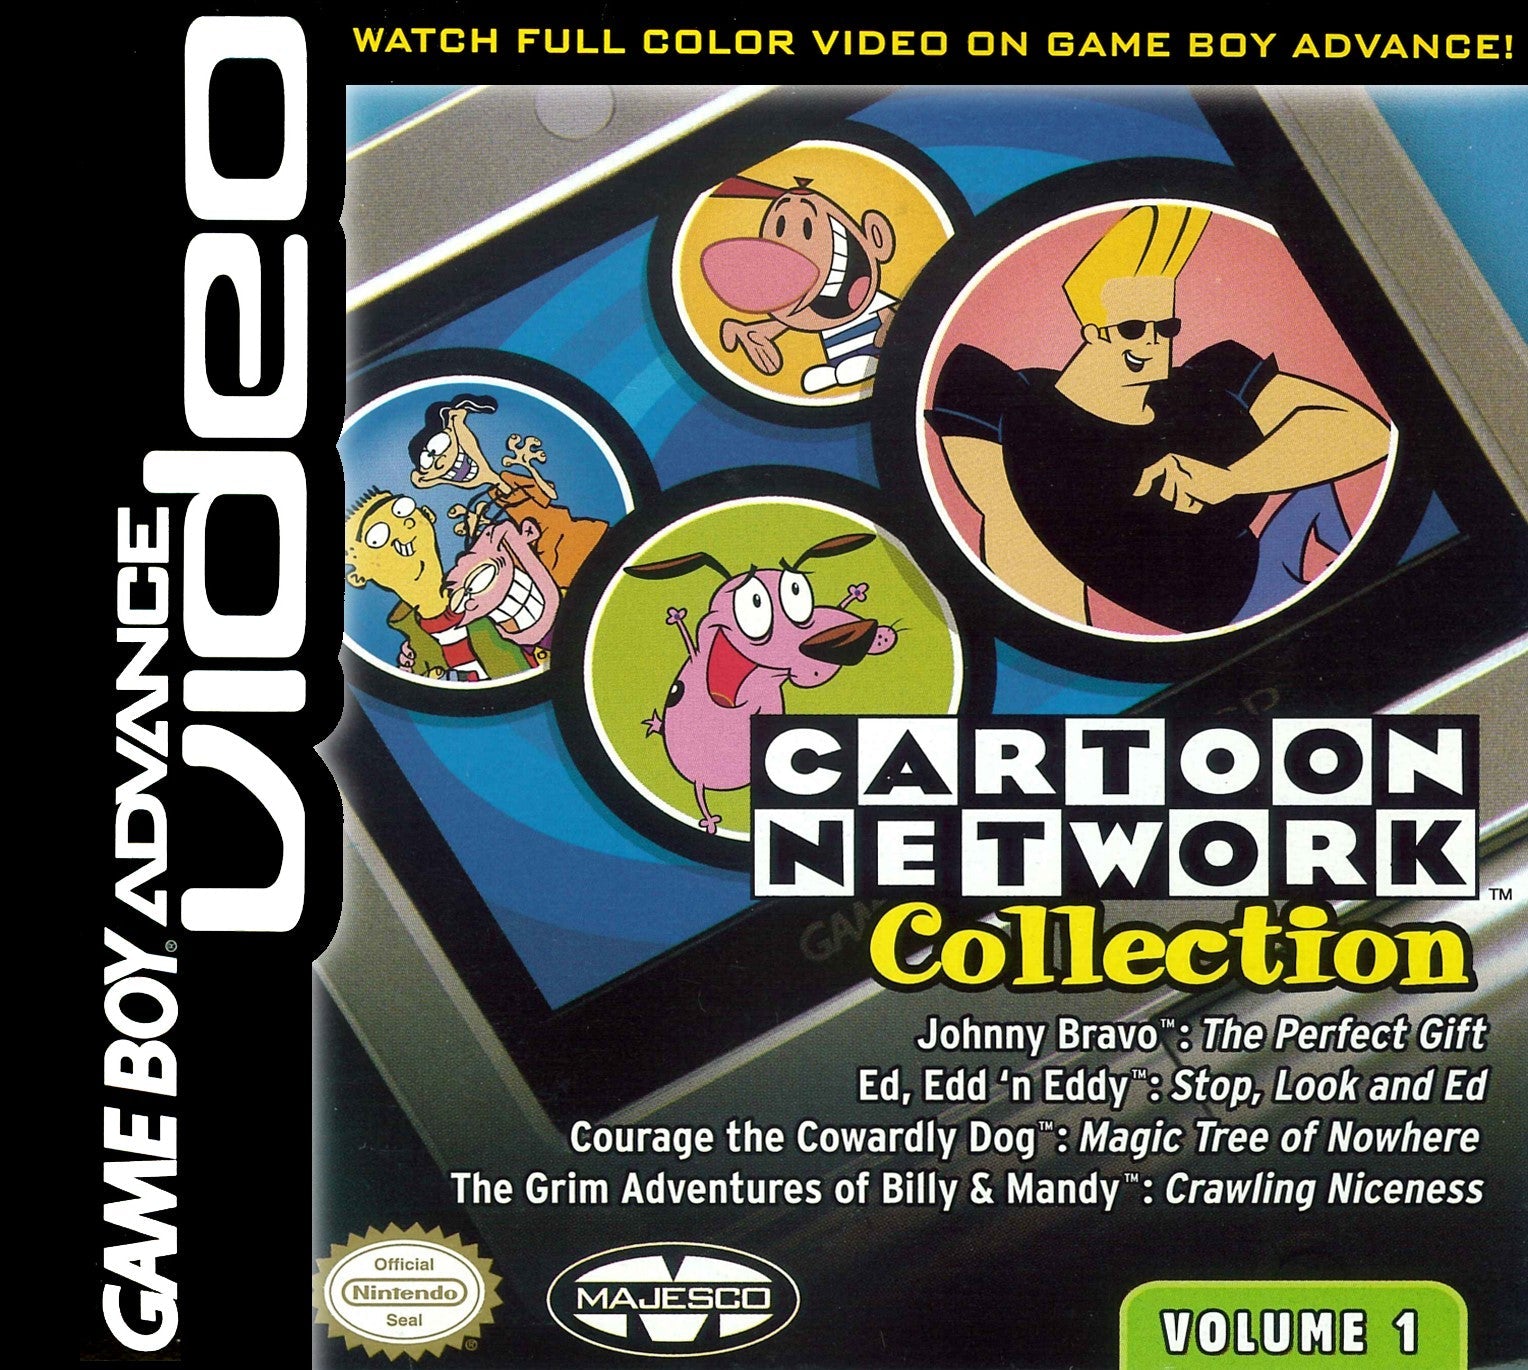 Video - Cartoon Network Collection, Vol. 1